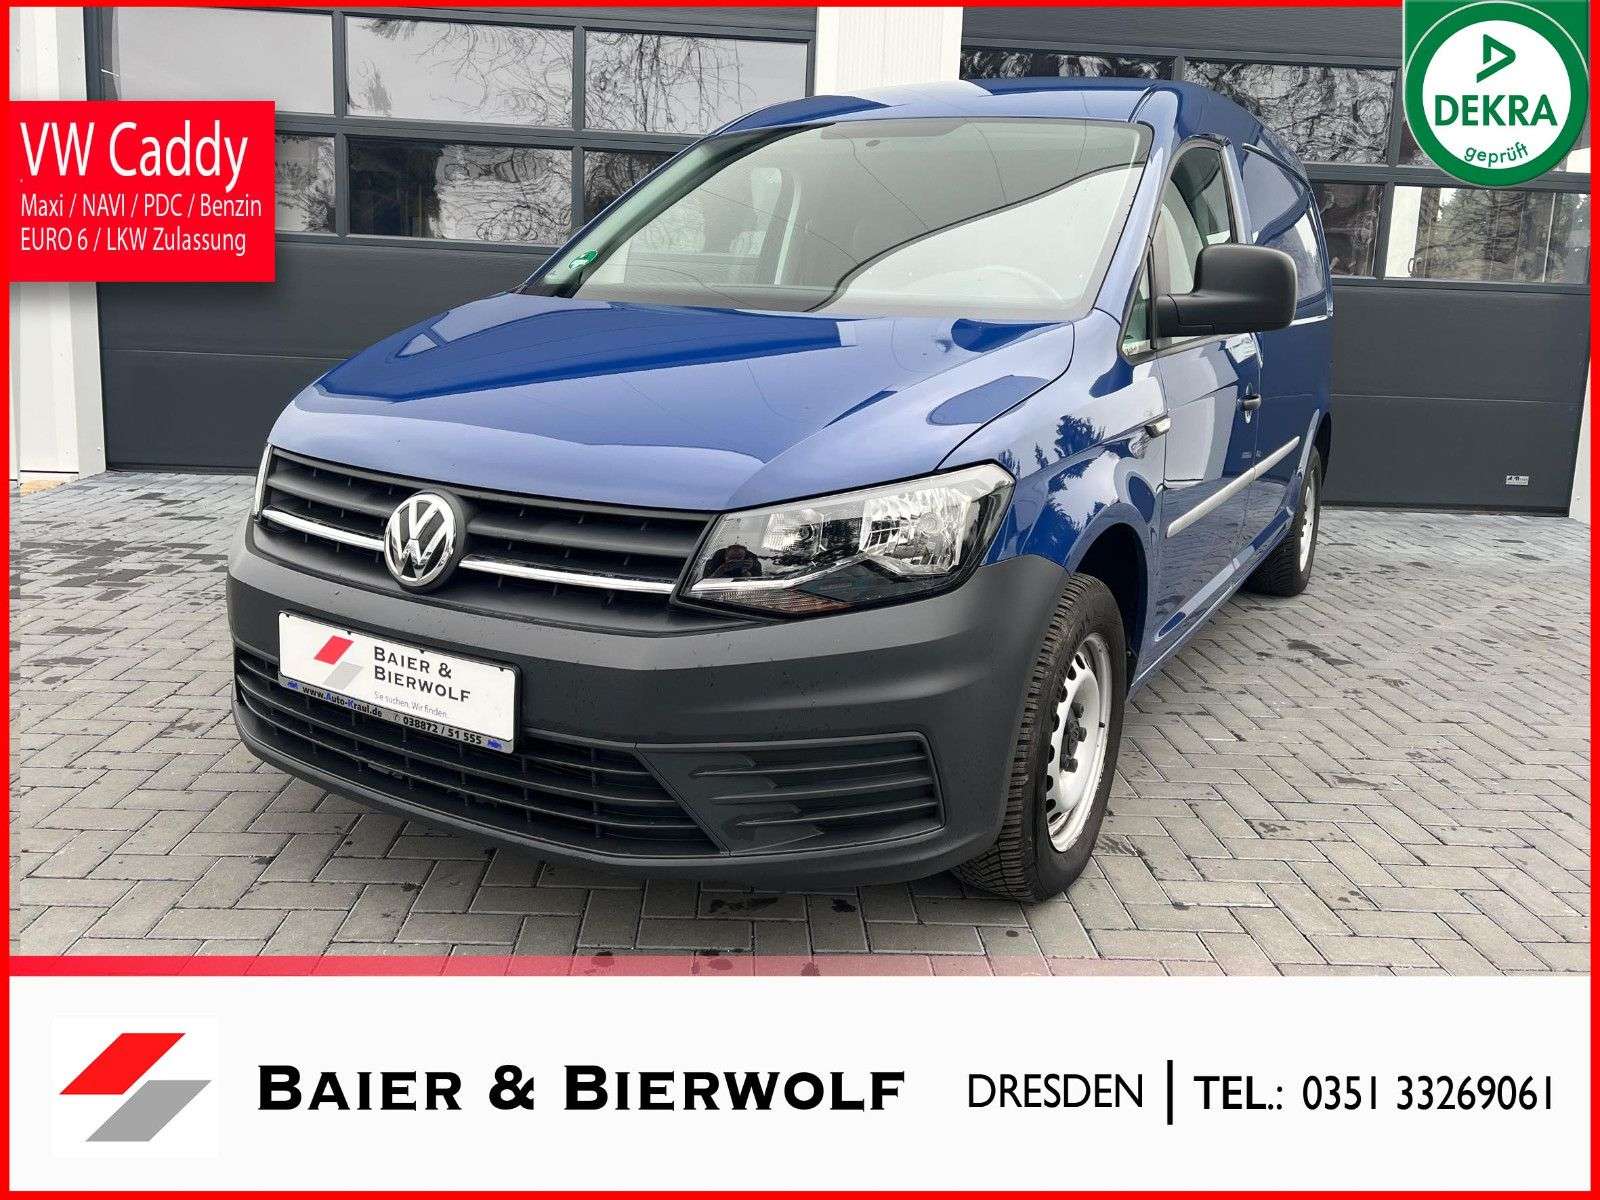 Volkswagen Caddy Van in Blue used in Coswig for € 18,990.-